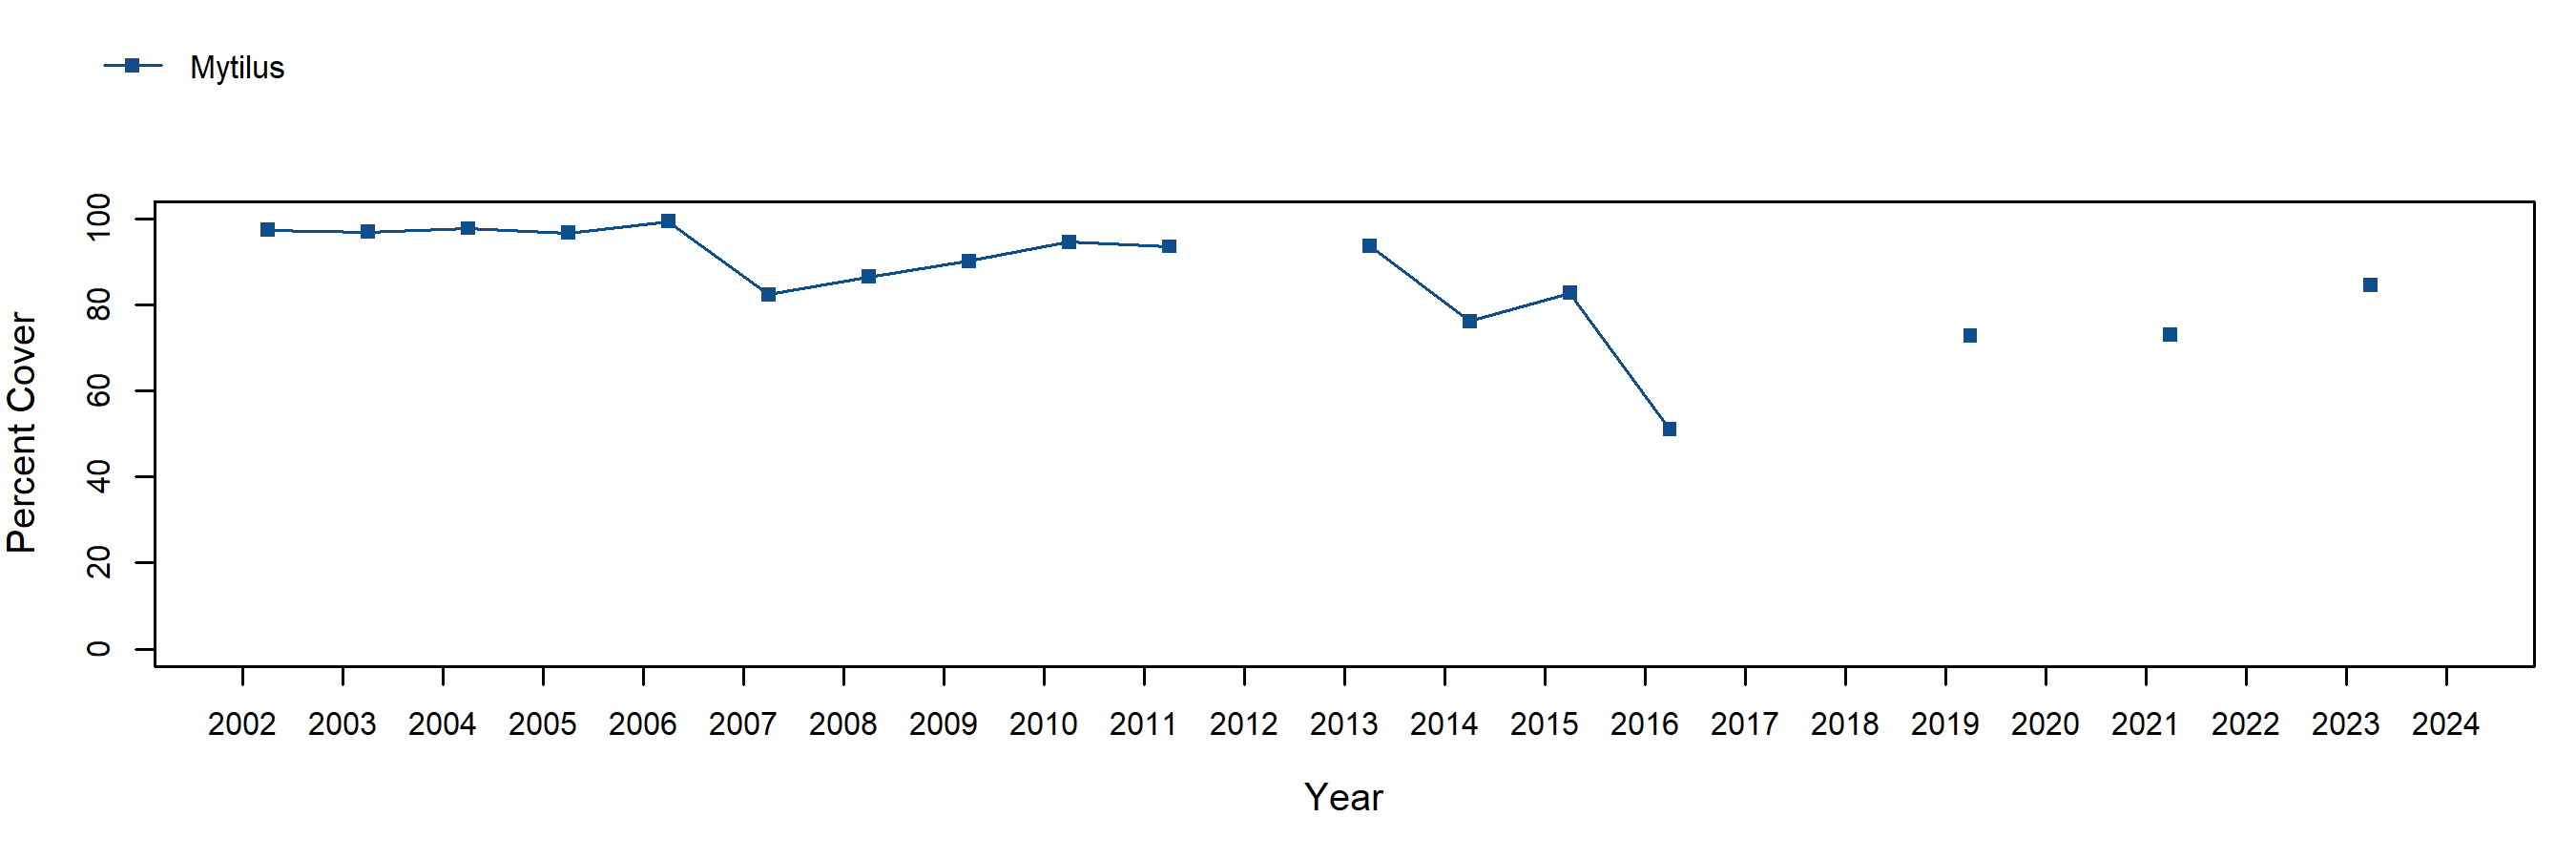 Burnt Hill Mytilus trend plot